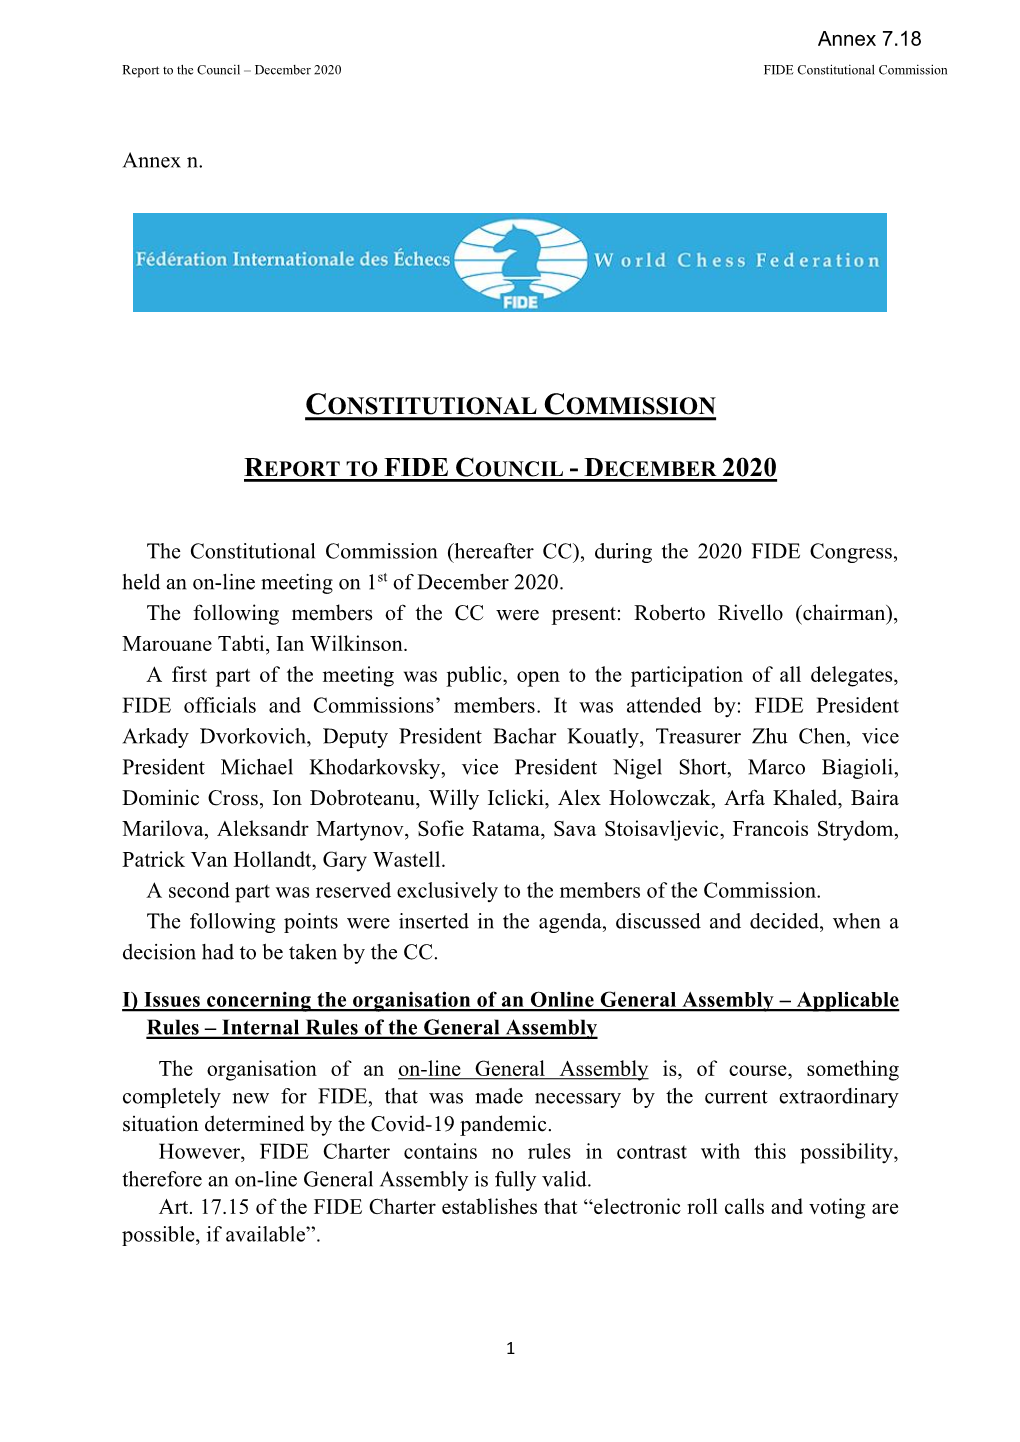 Constitutional Commission